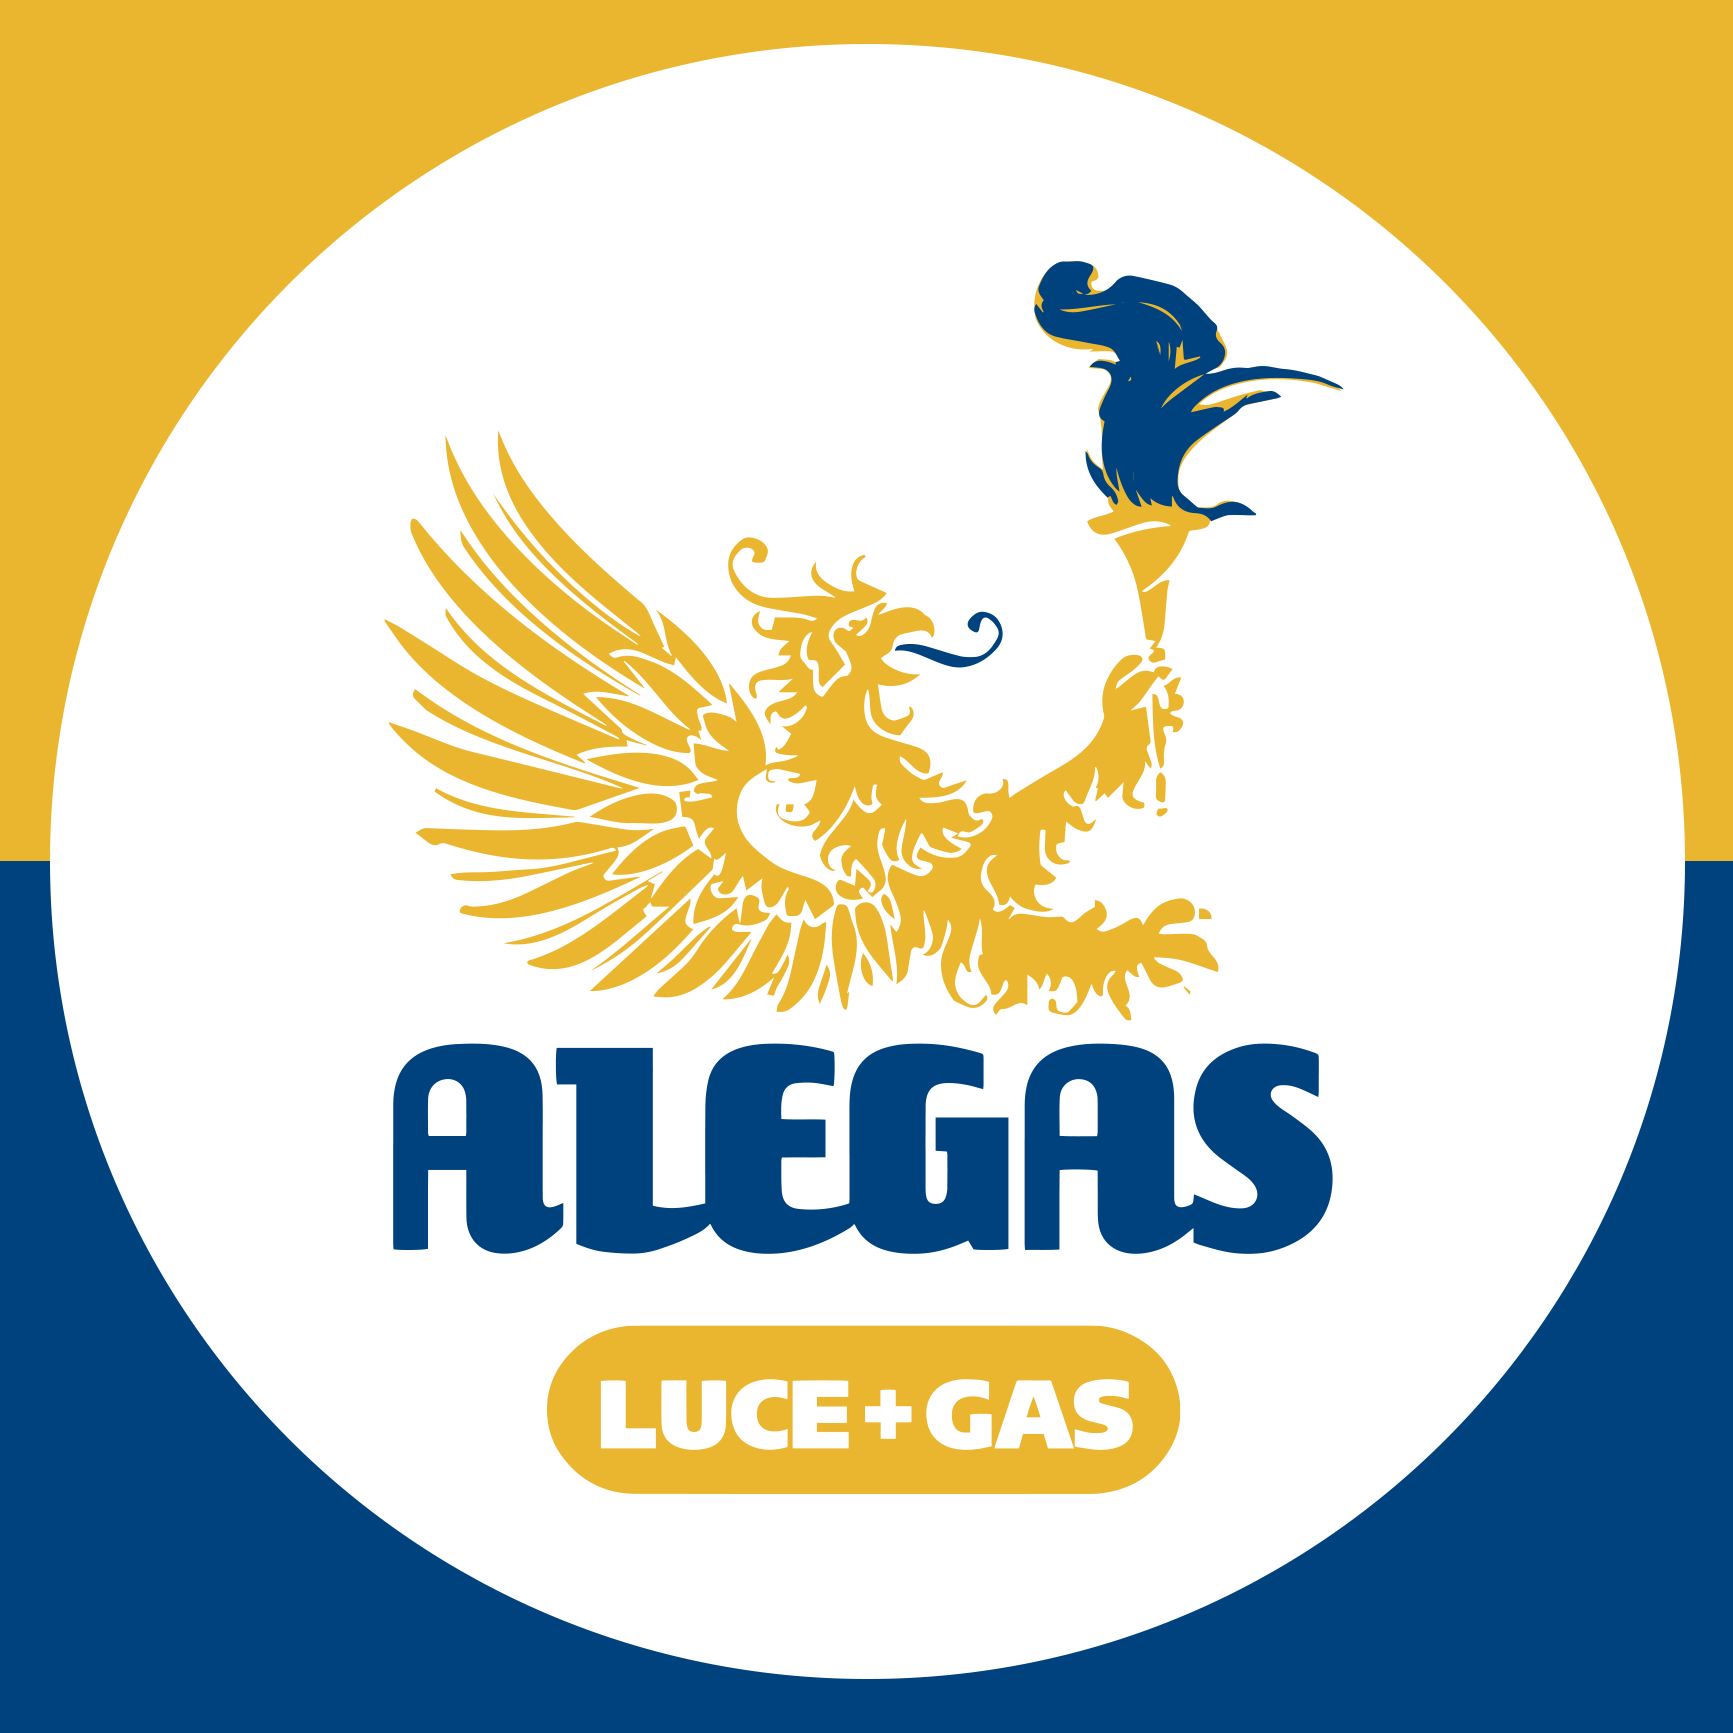 Vendita Alegas, sindacati: “Tutela dipendenti condizione imprescindibile”